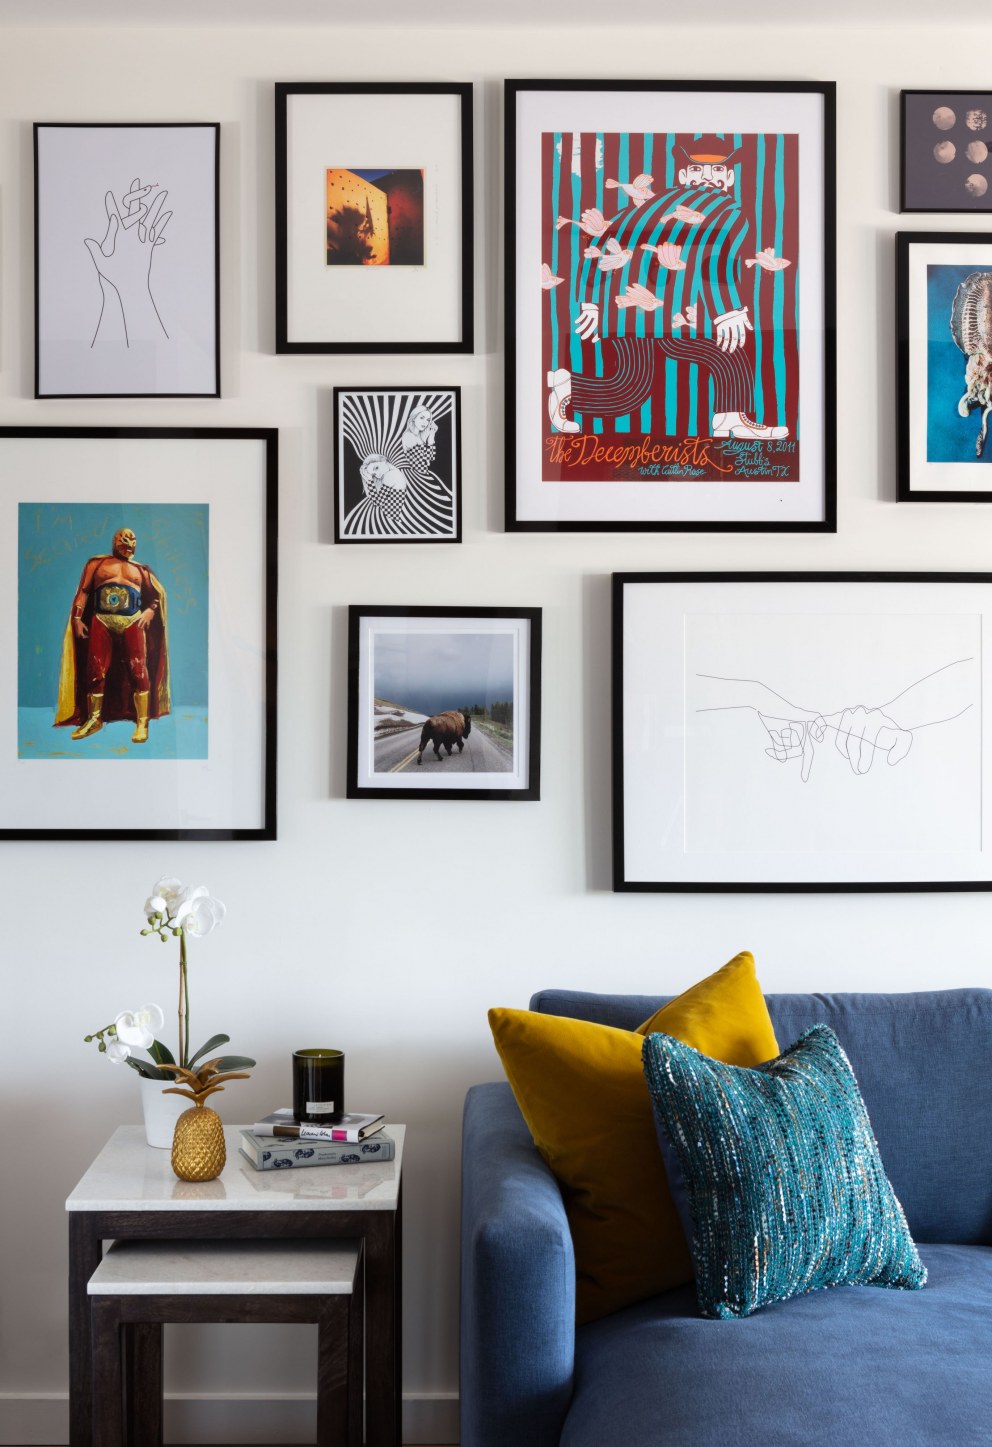 London Duplex Apartment | Open Plan Living Space | Interior Designers